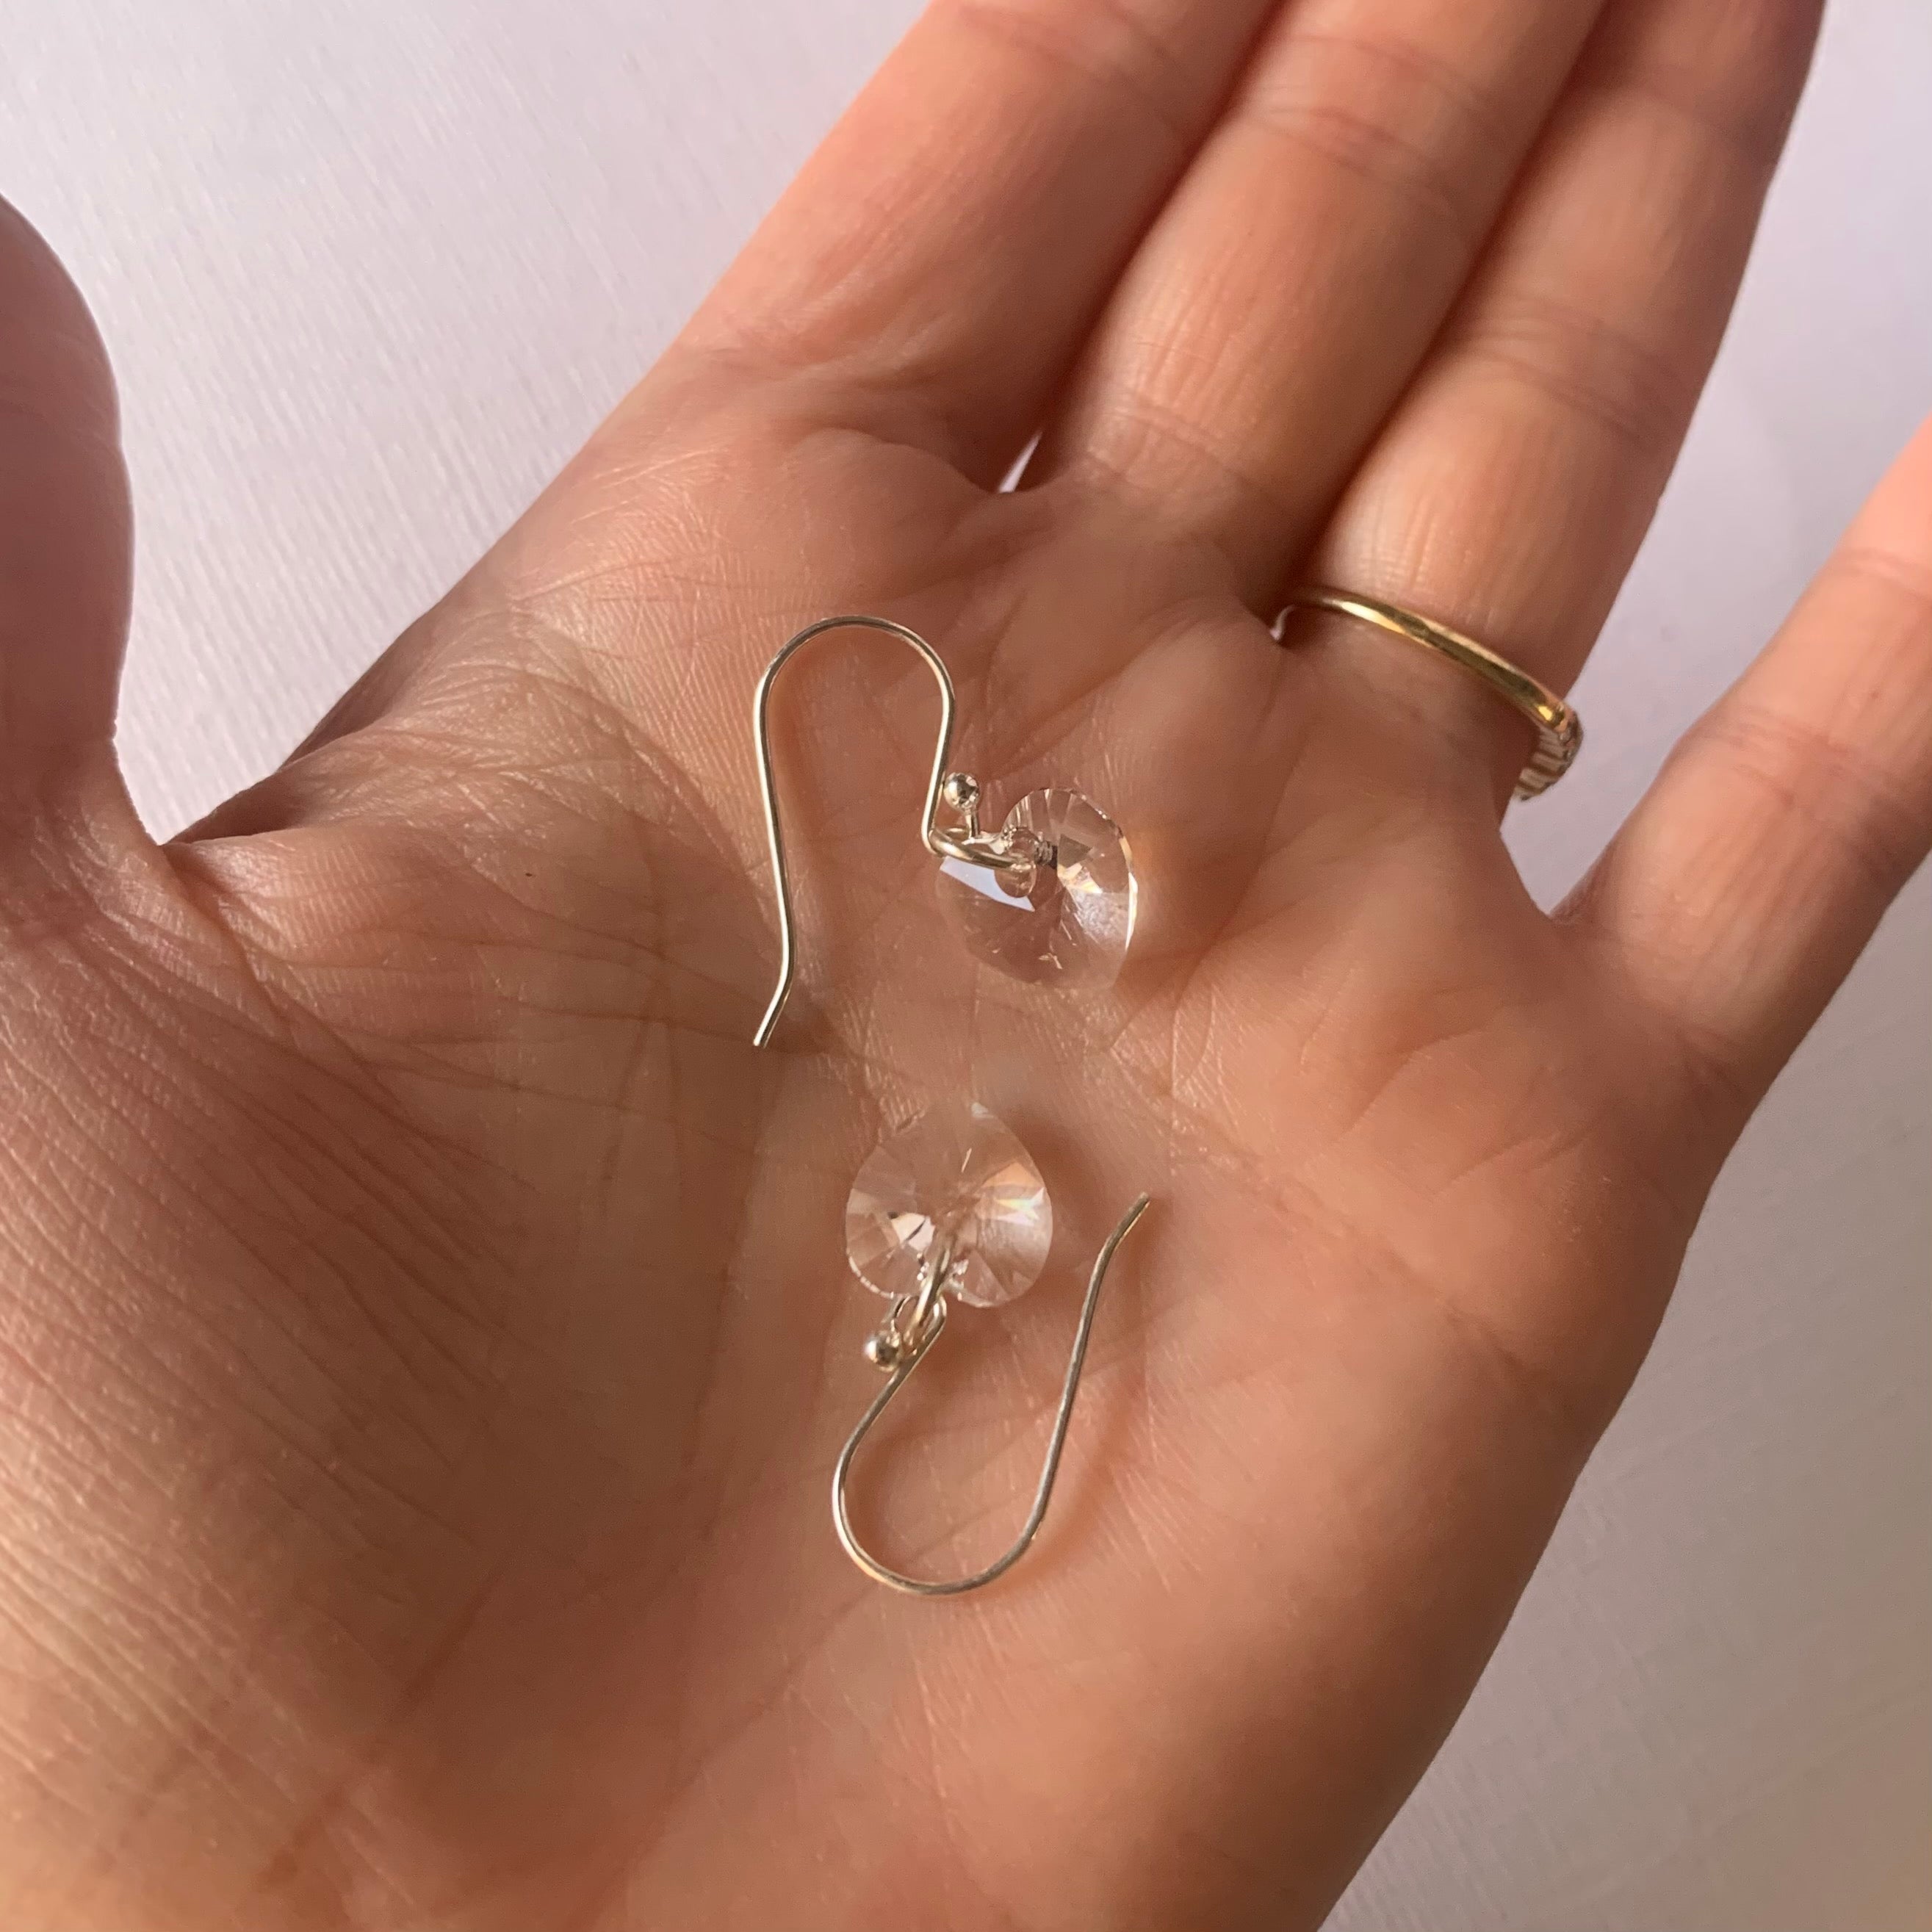 Sparkle heart earrings - Swarovski crystal hearts in crystal clear